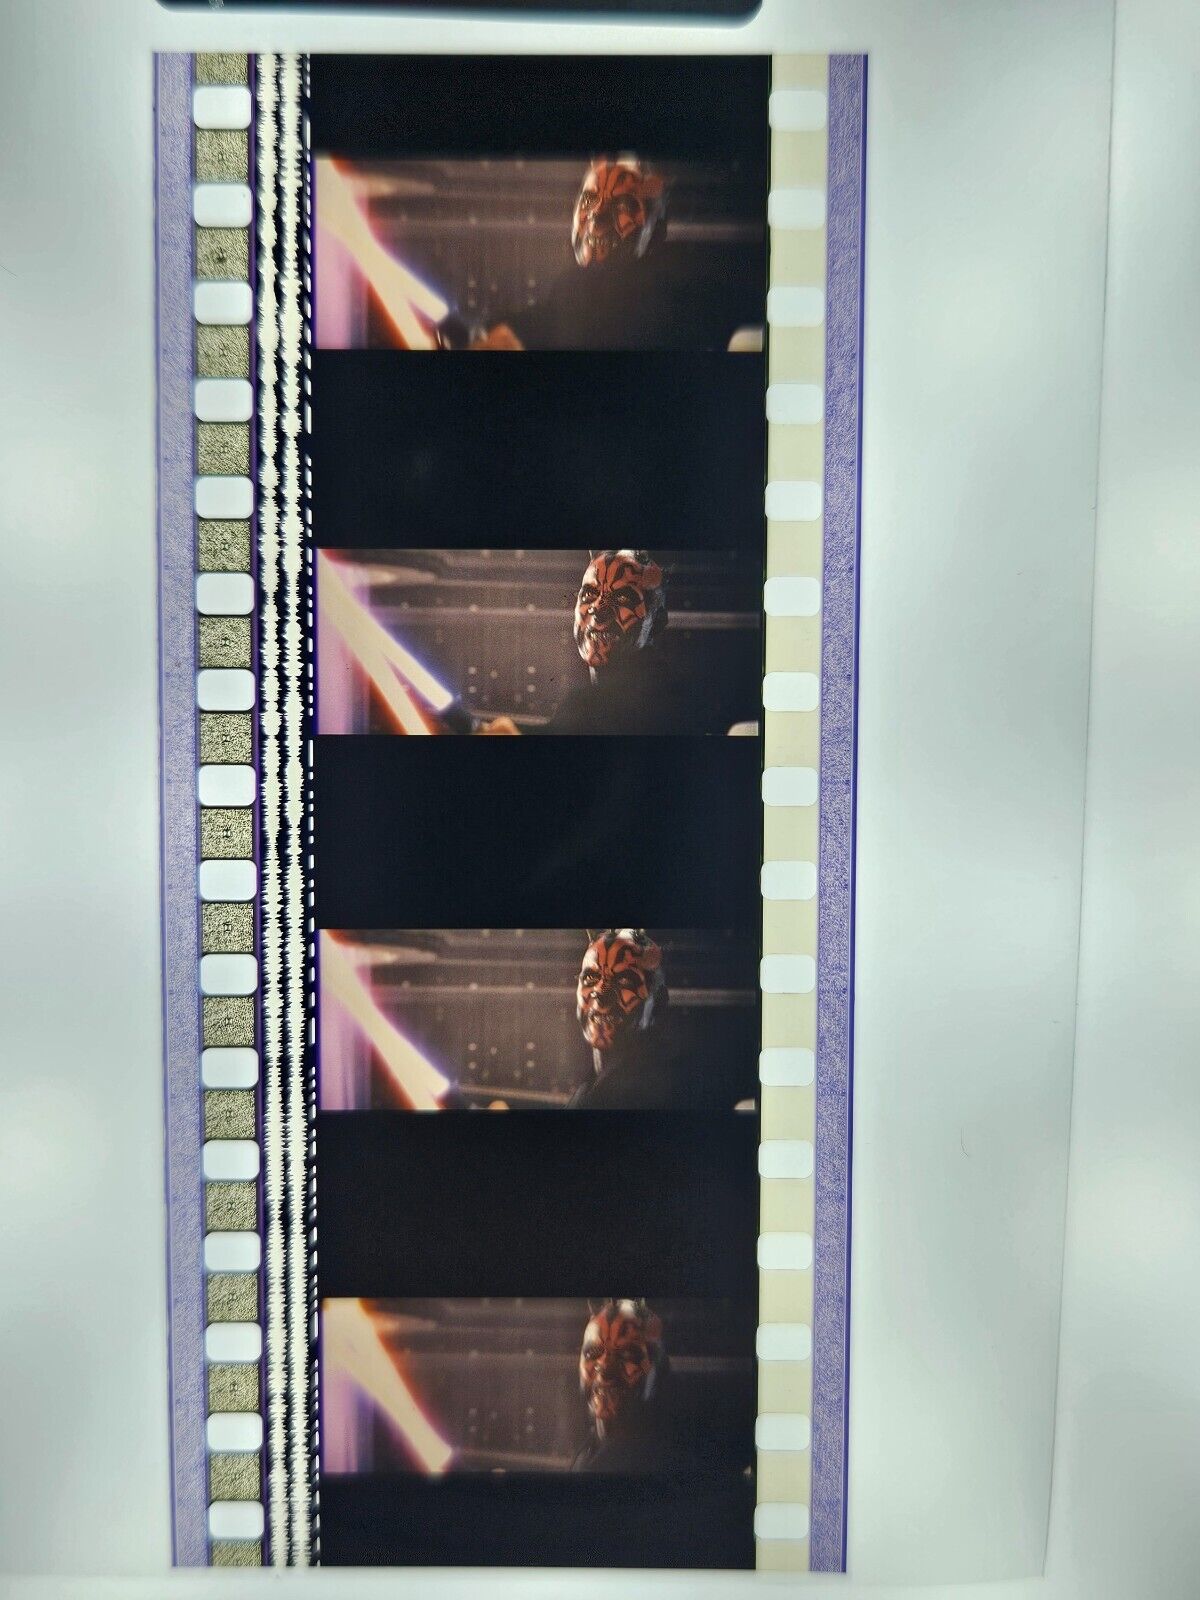 Darth Maul Star Wars Episode 1 Phantom Menace 35mm Original Film Cells SW2085 Star Wars 35mm Film Cell - Hobby Gems